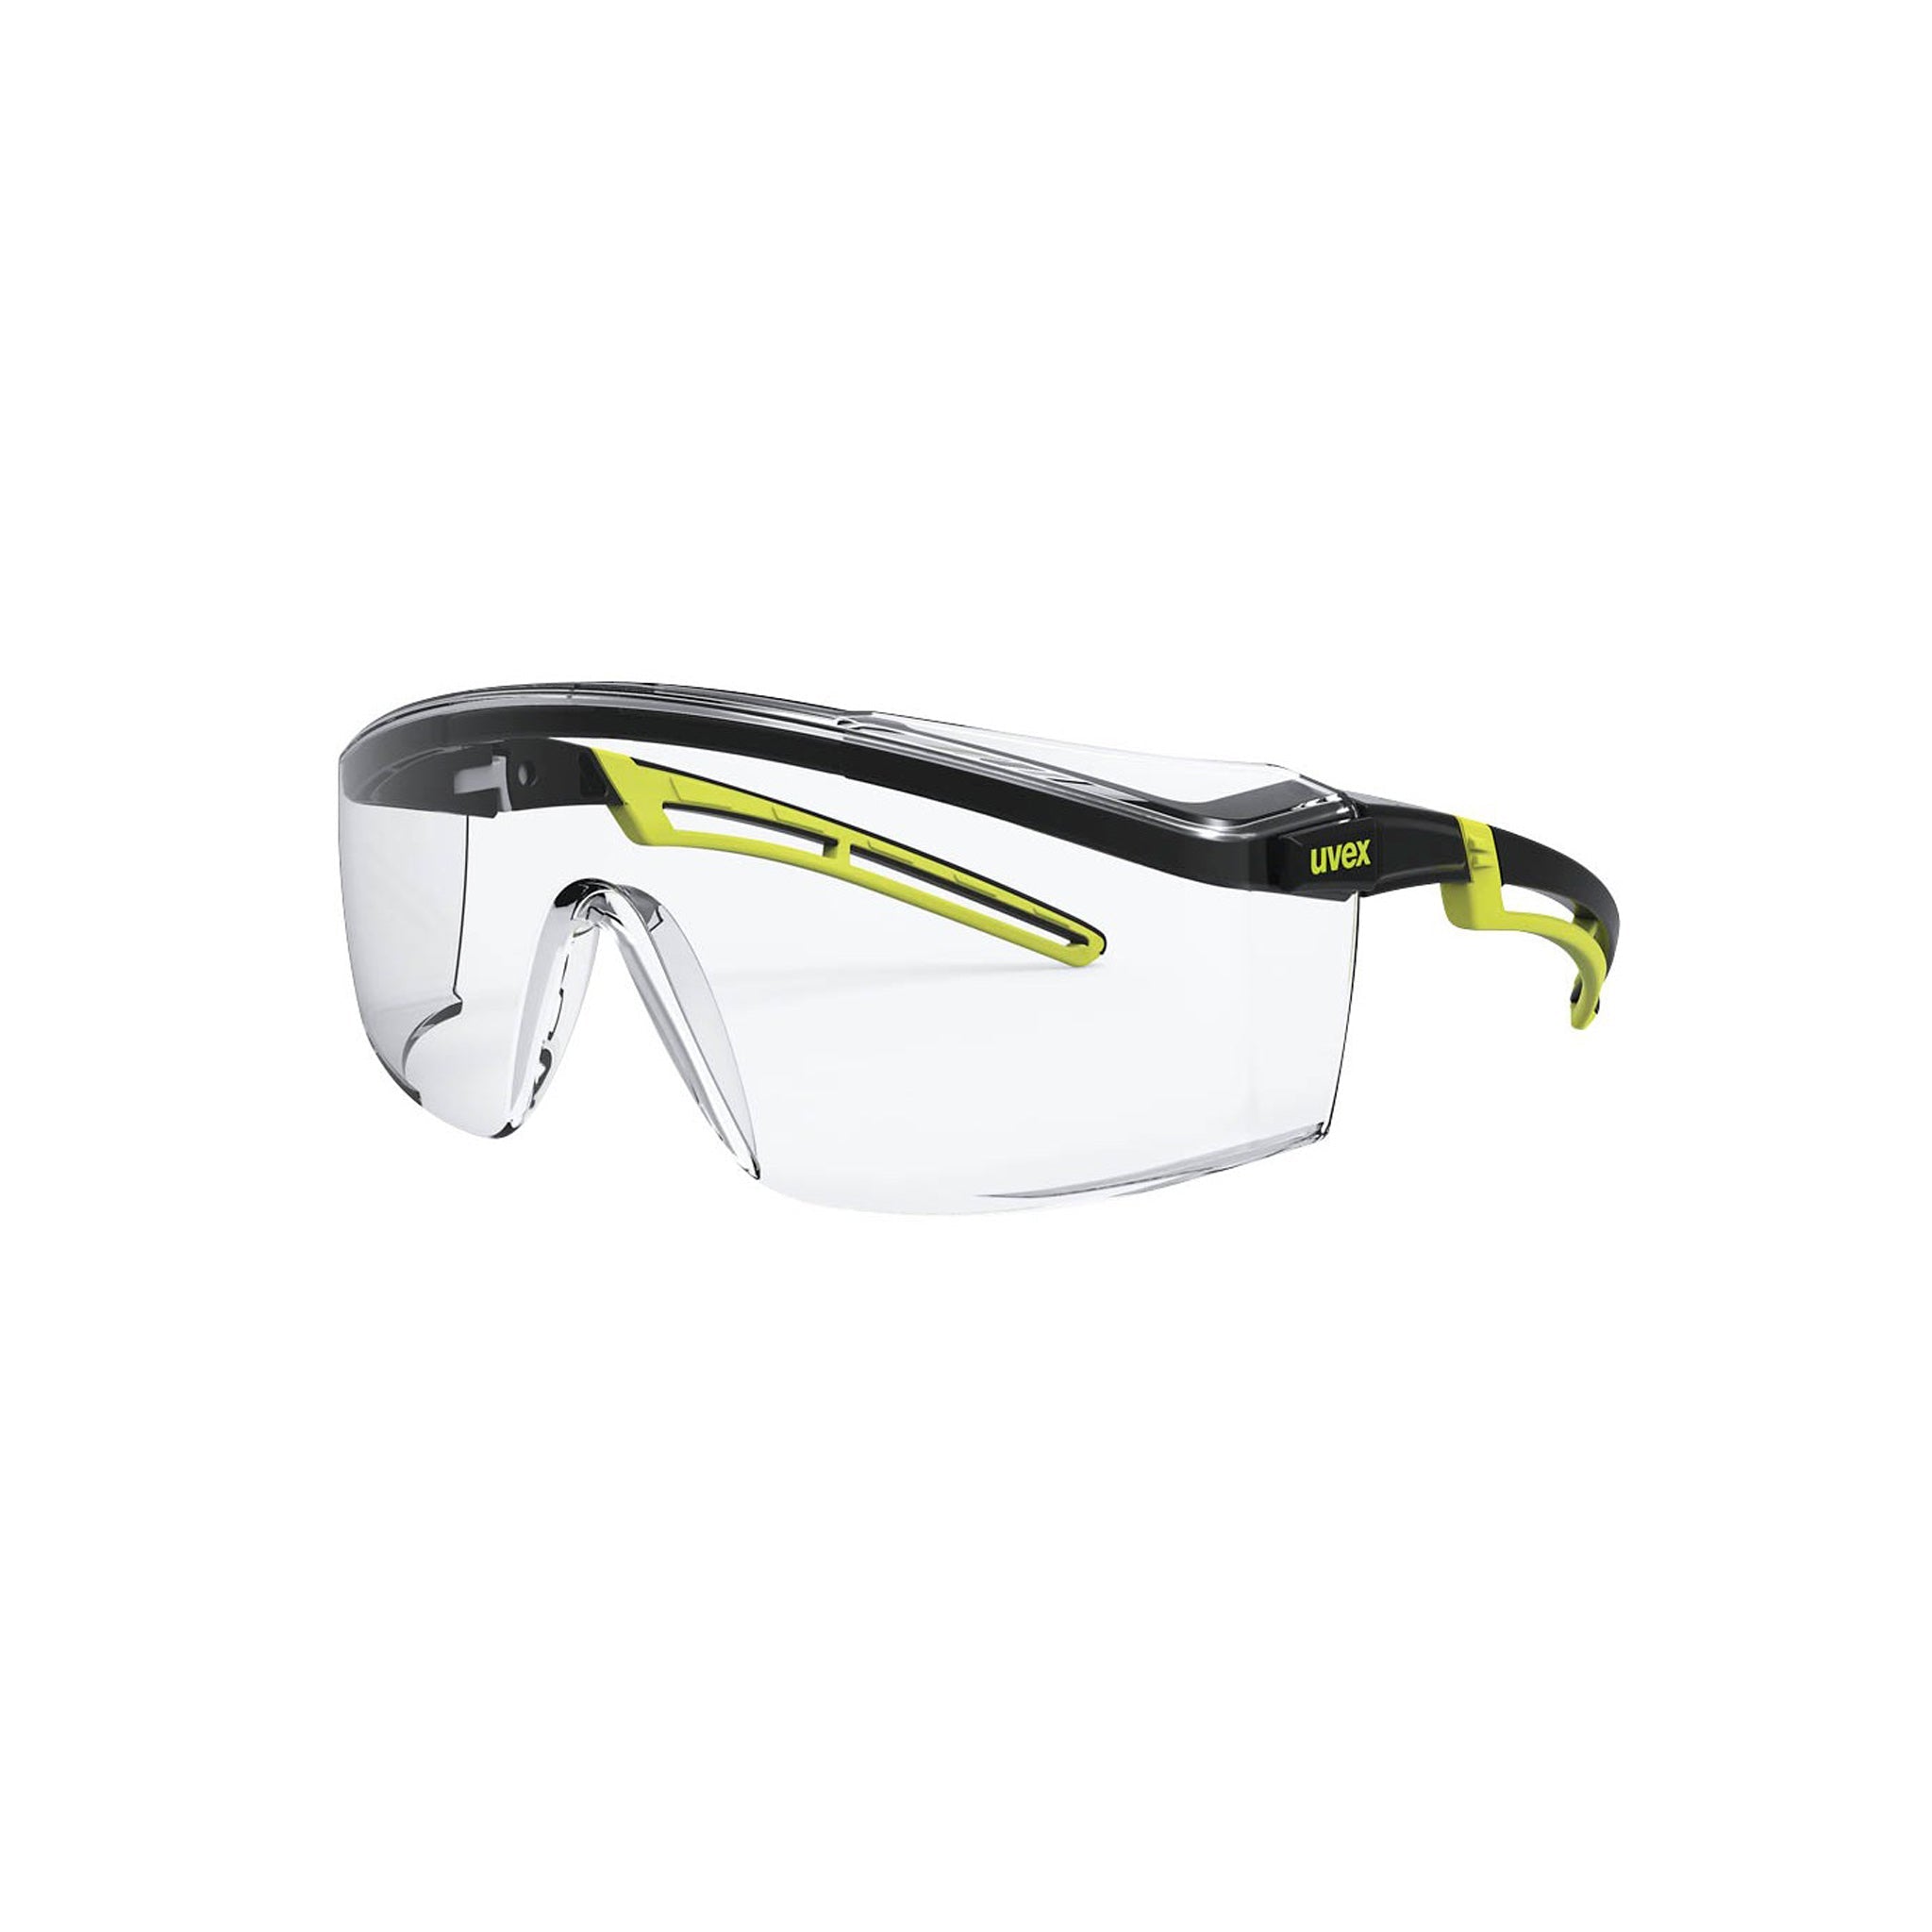 Astrospec 2.0 safety glasses